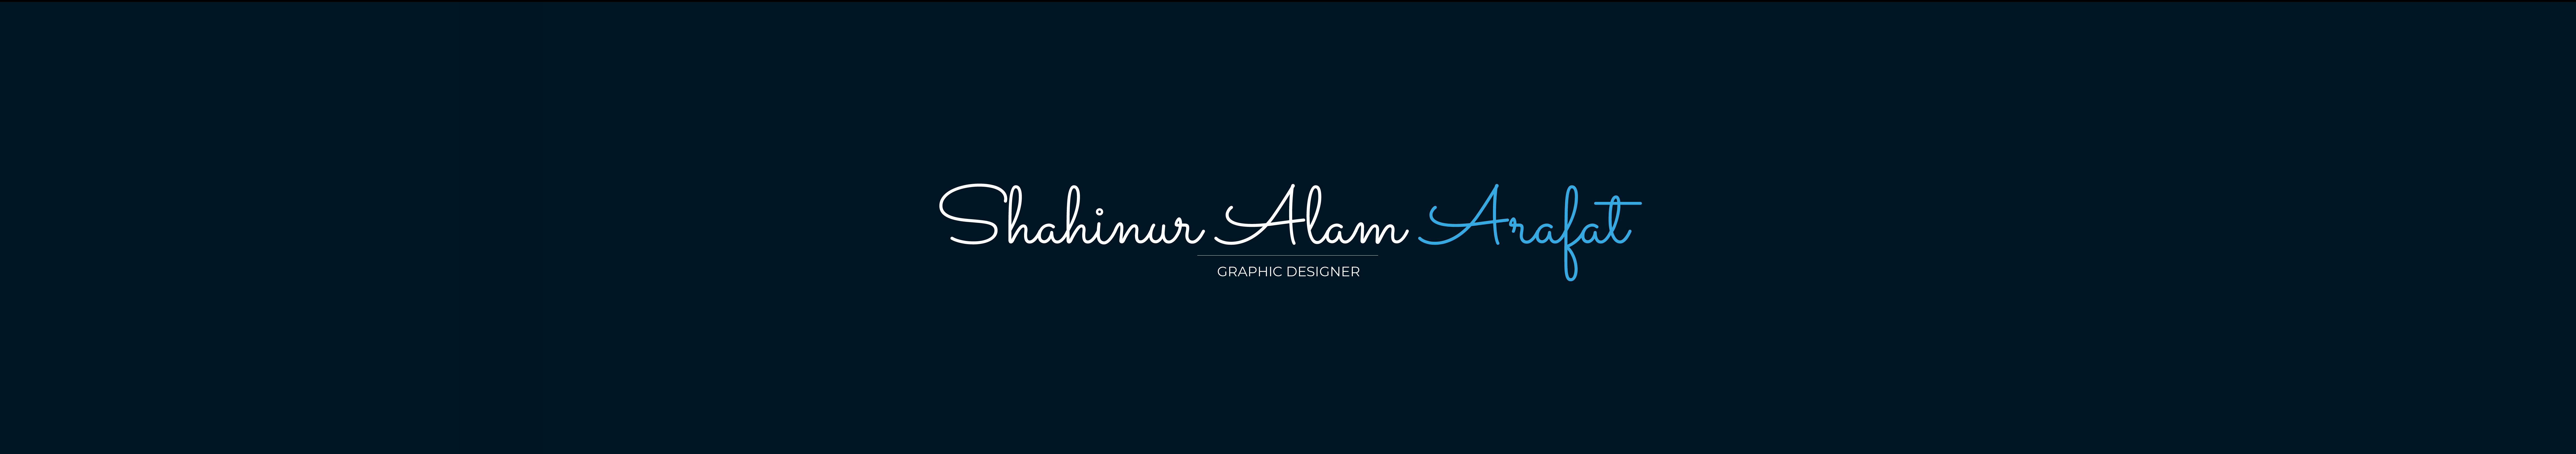 Banner de perfil de Shahinur Alam Arafat